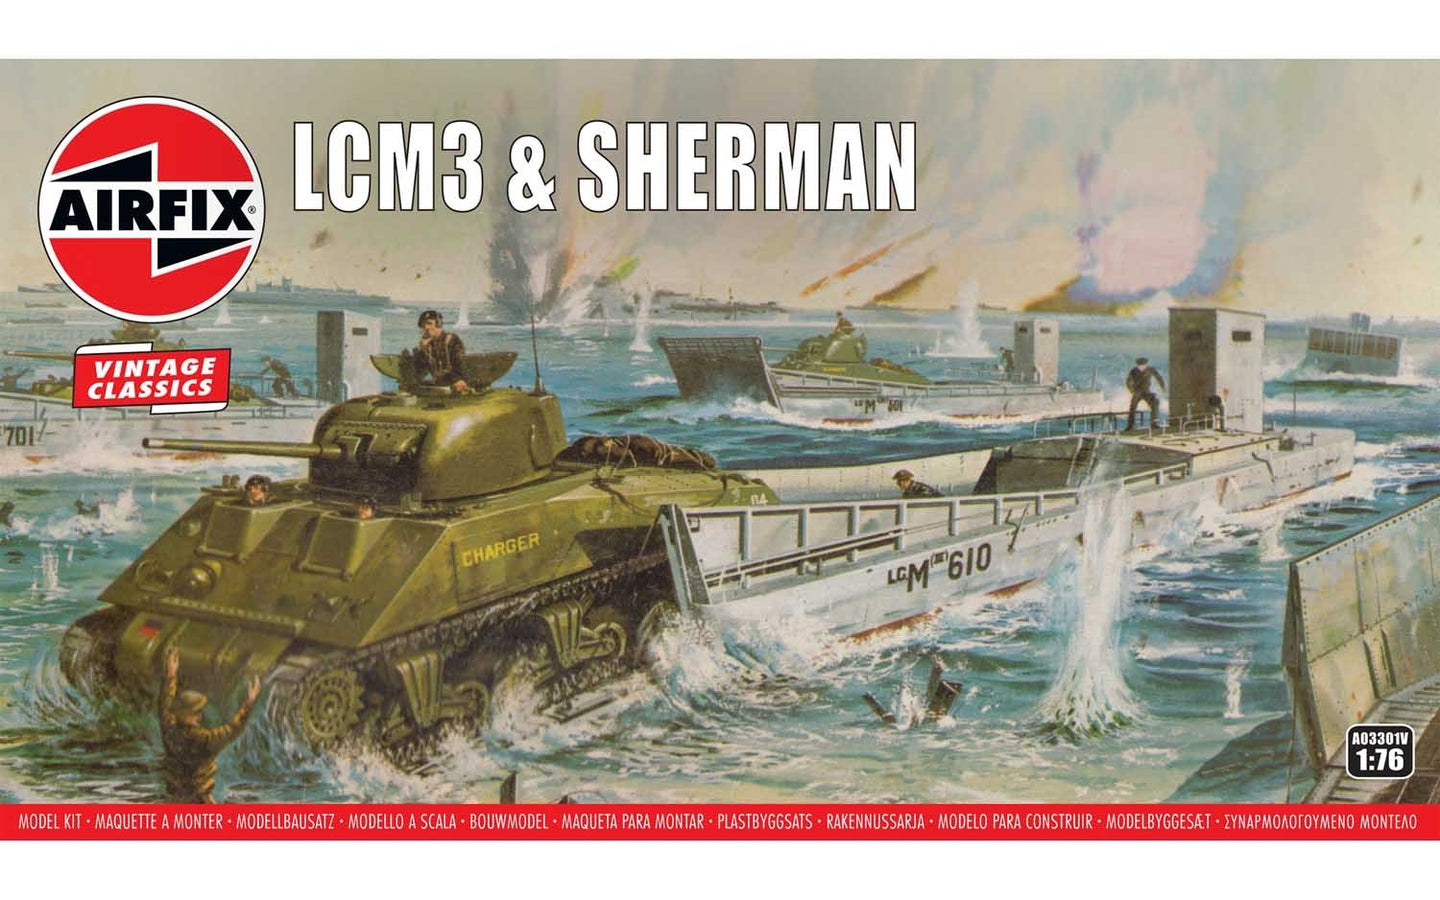 Airfix 1/76 US LCM3 & Sherman A03301V